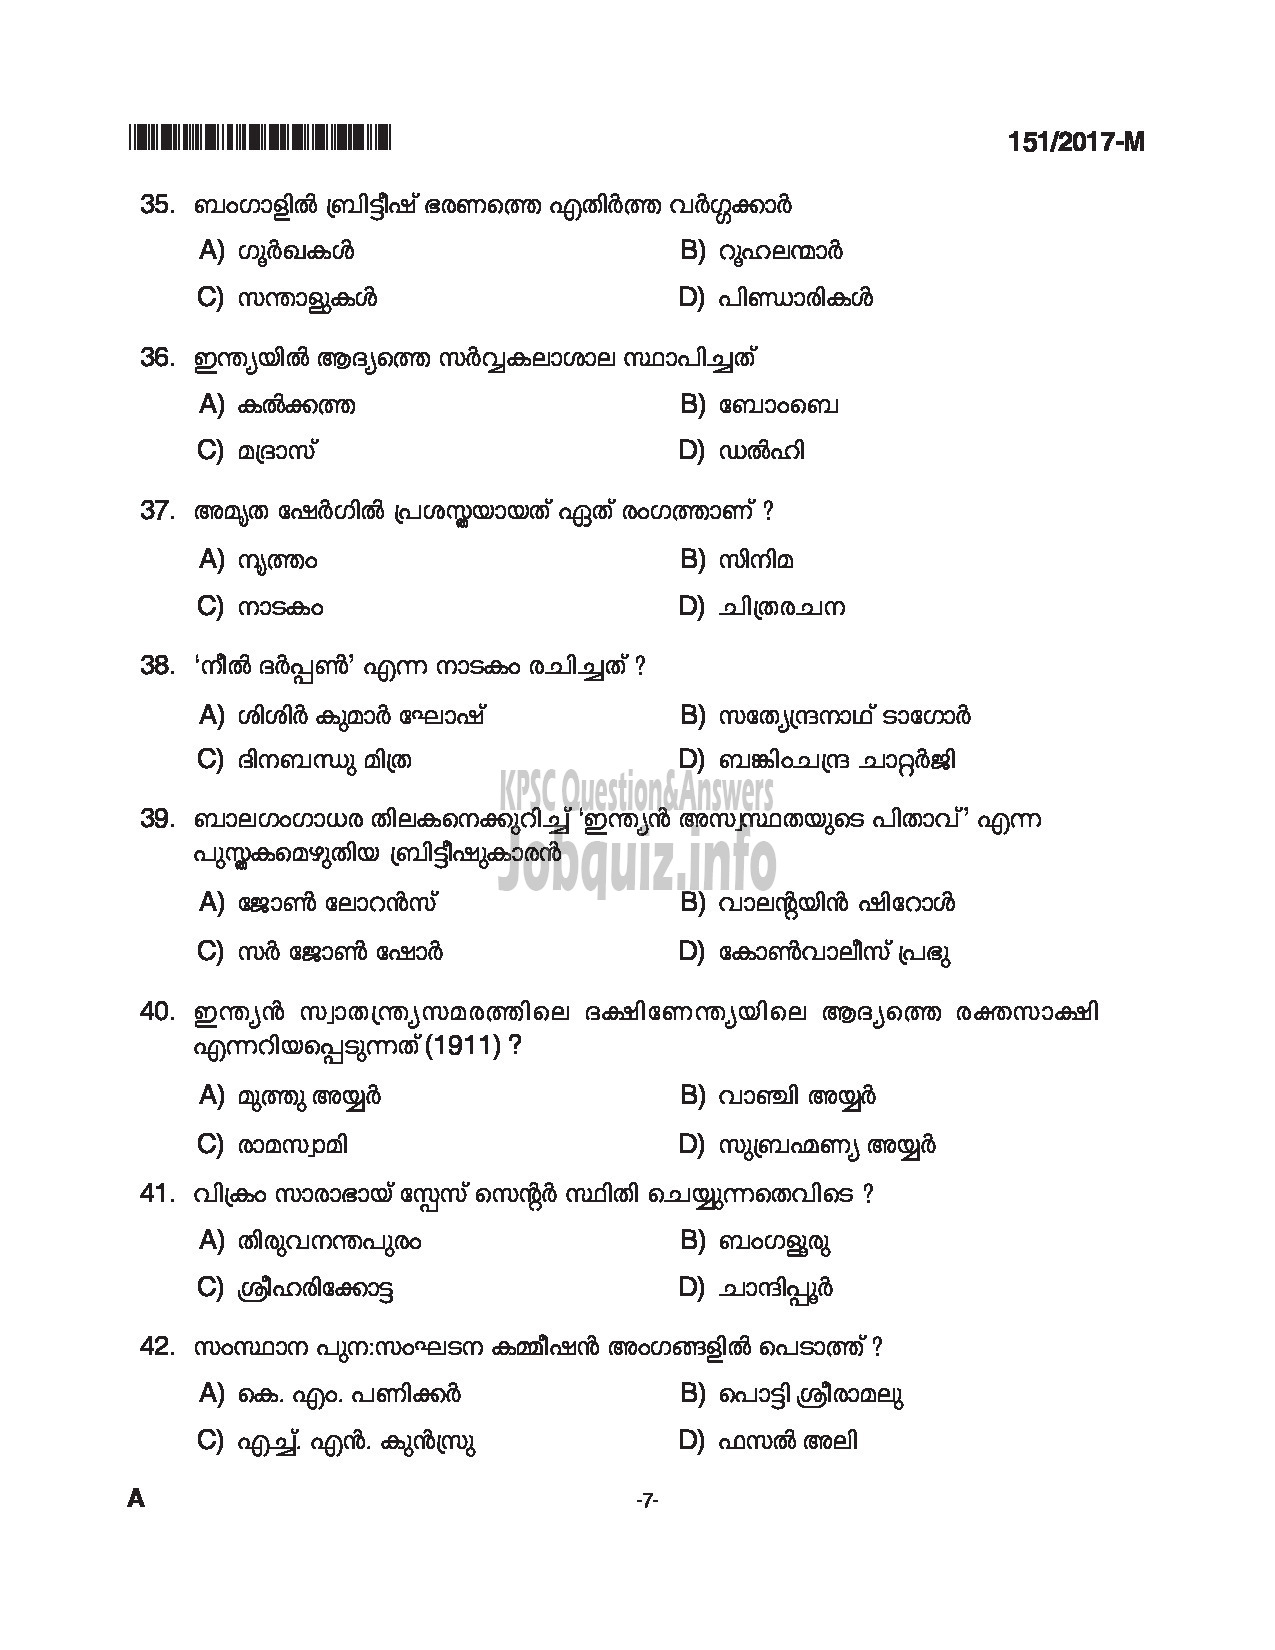 Kerala PSC Question Paper - SALESMAN/SALESWOMEN GENERAL CATEGORY HANTEX LTD MALAYALAM-7